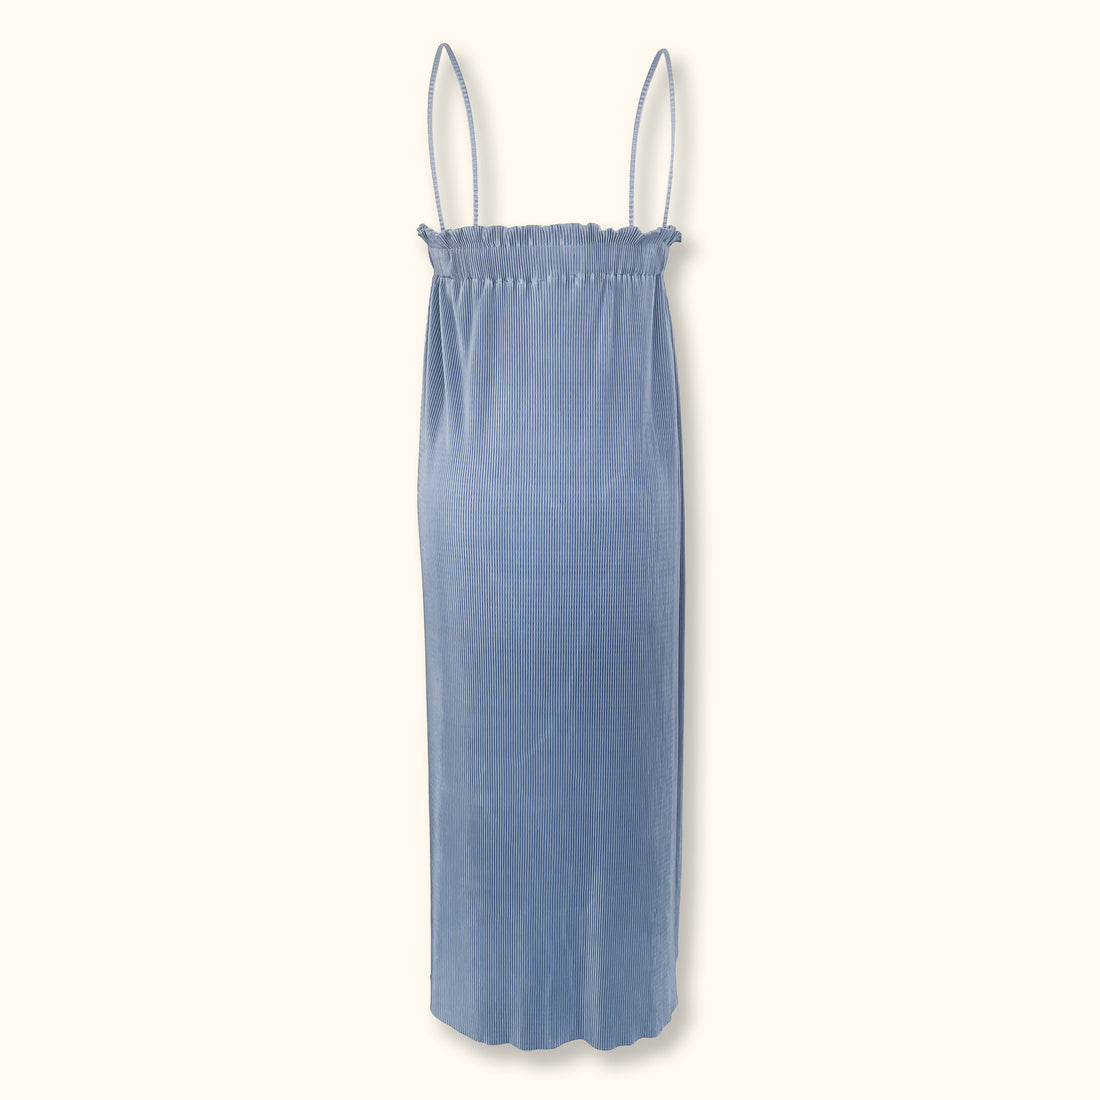 Zara Cool Blue Plisse Midi Dress - Size Medium - Zara - Dresses